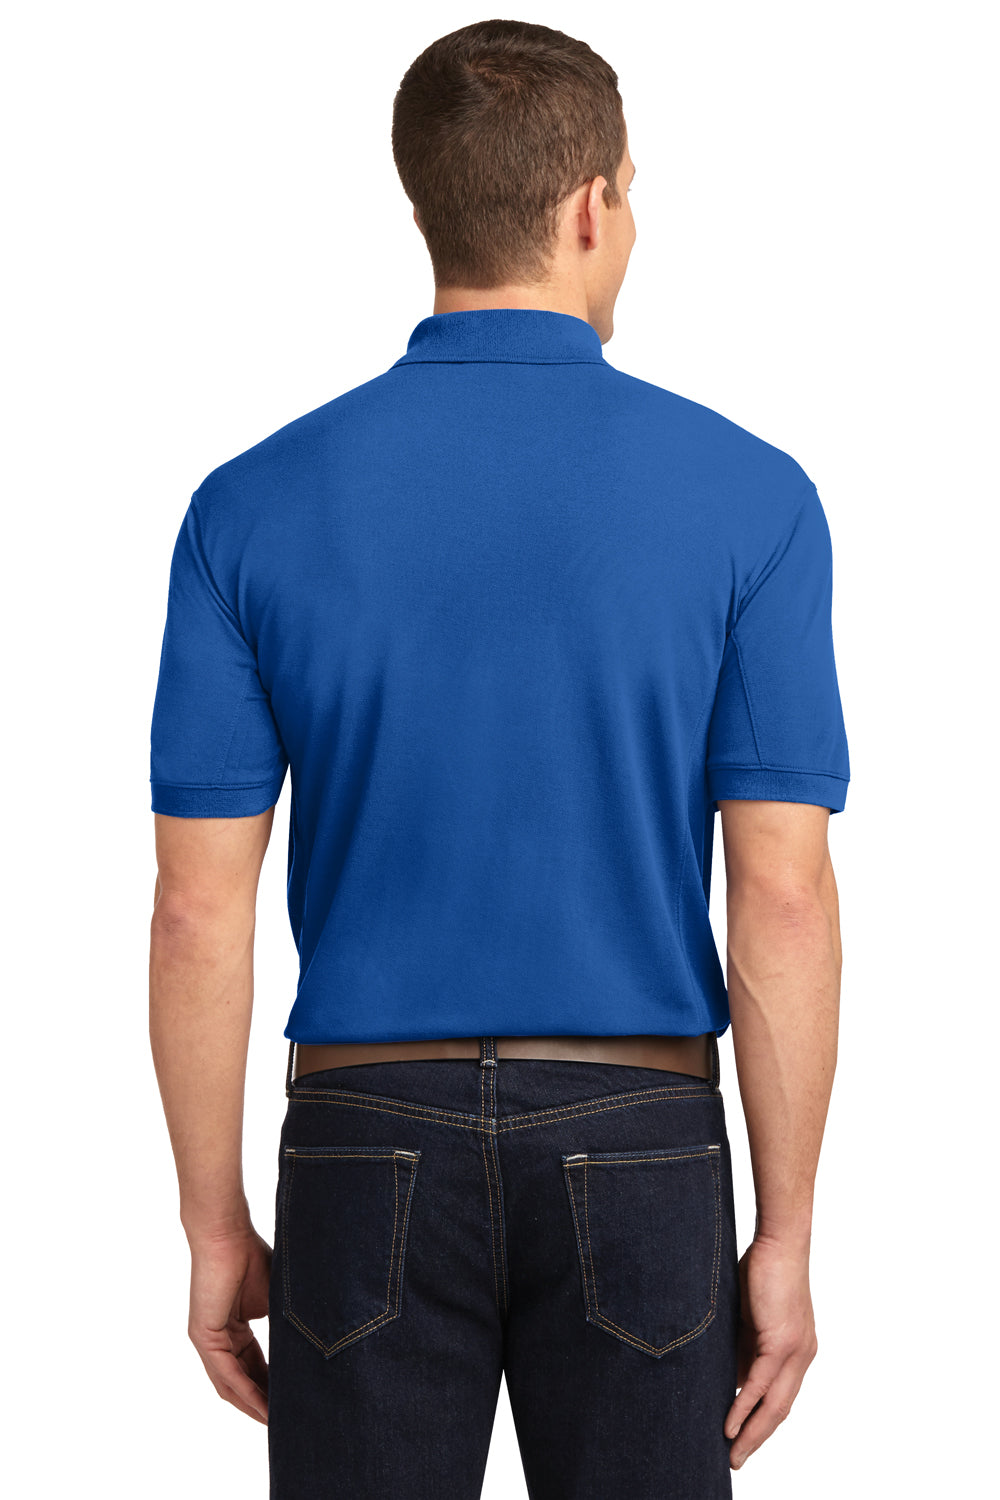 Port Authority K567 Mens 5-1 Performance Moisture Wicking Short Sleeve Polo Shirt Royal Blue Back